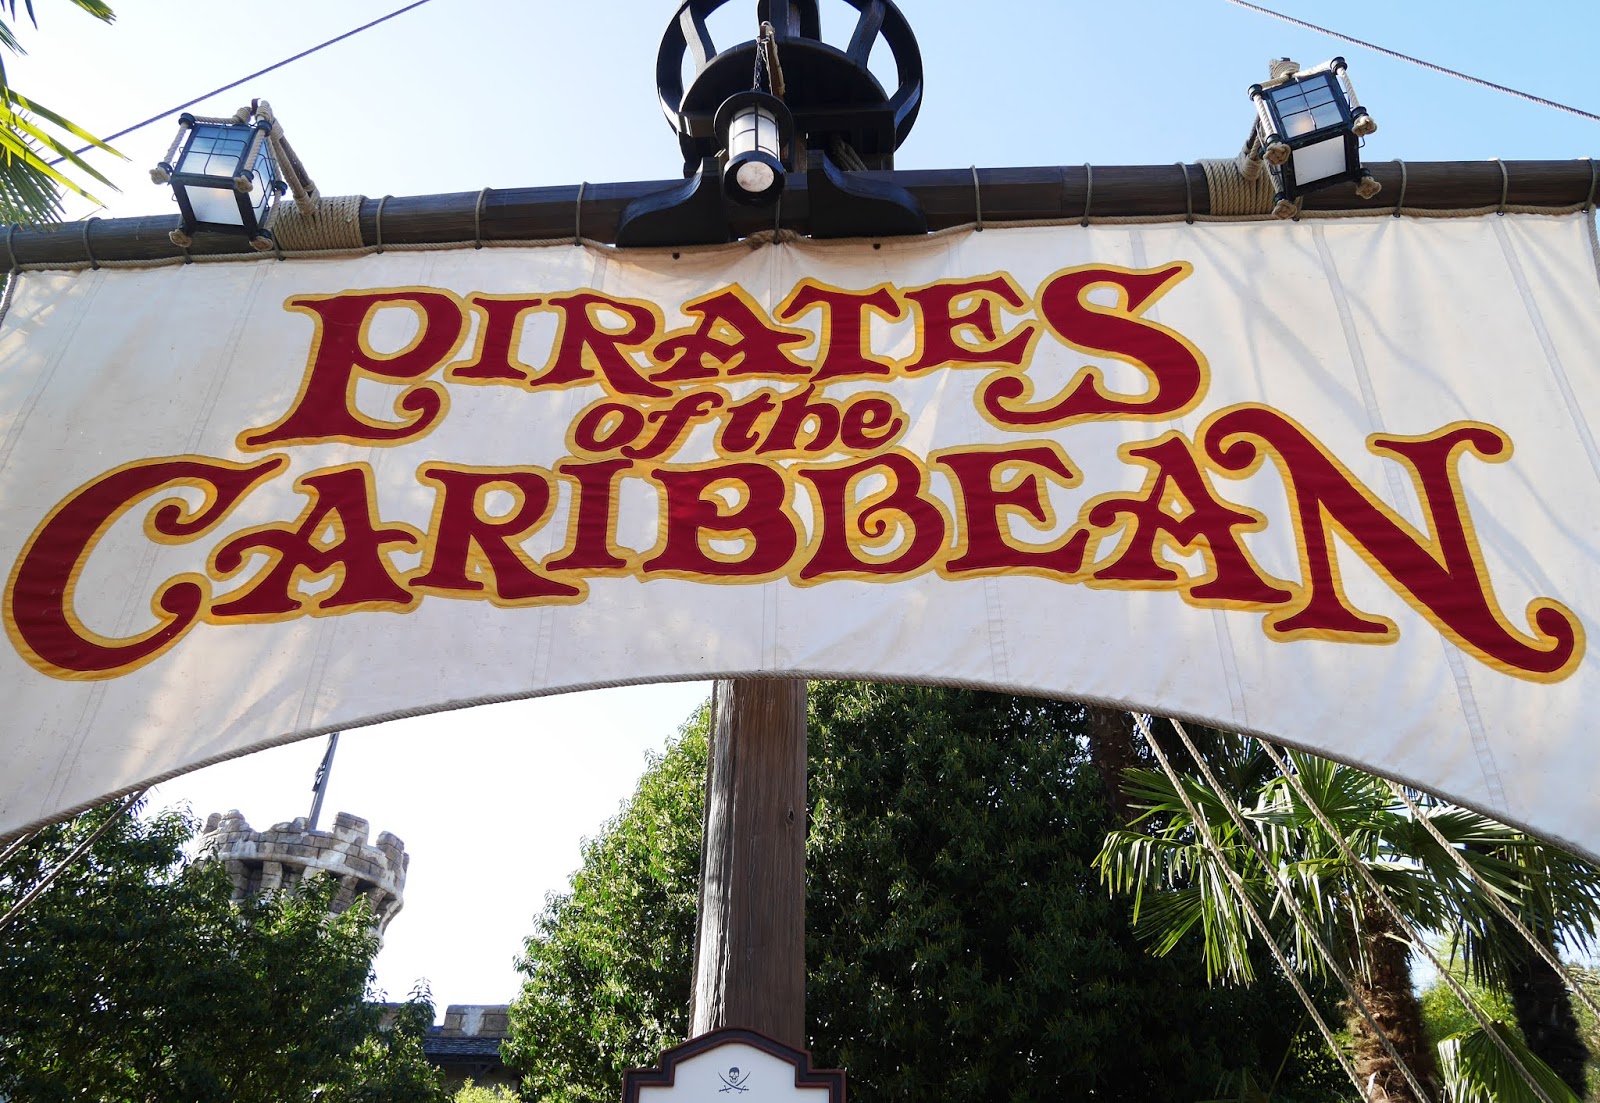 Pirates of the Caribbean ride at Disneyland Paris